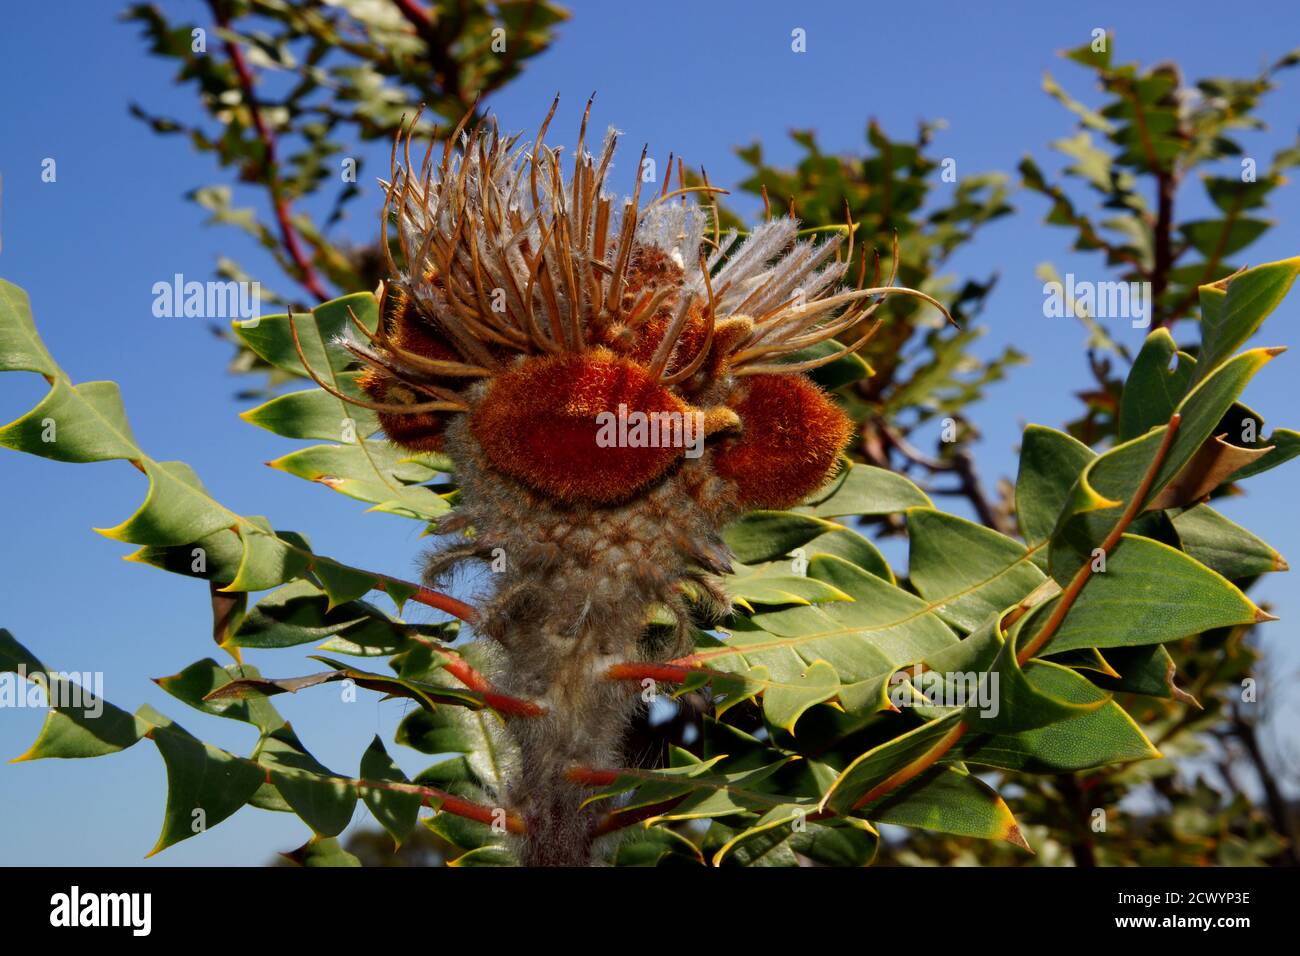 Cone of bird nest banksia with seed capsules (Banksia baxteri), Western Australia Stock Photo